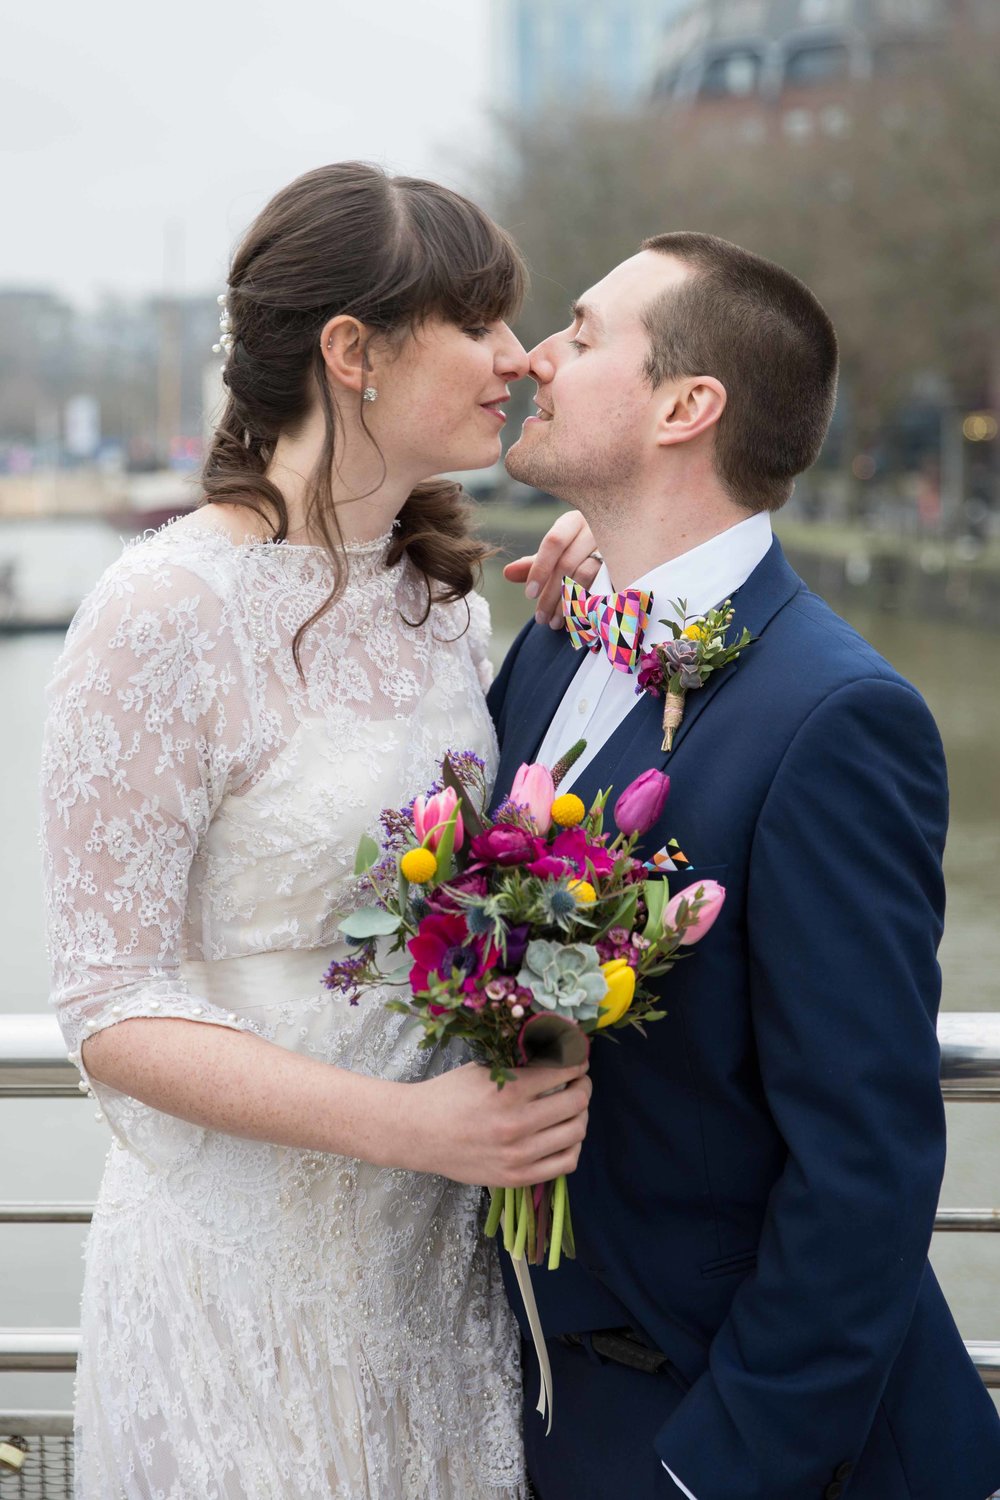 Adam & Faye - Wright Wedding Photography - Bristol Wedding Photographer -245.jpg